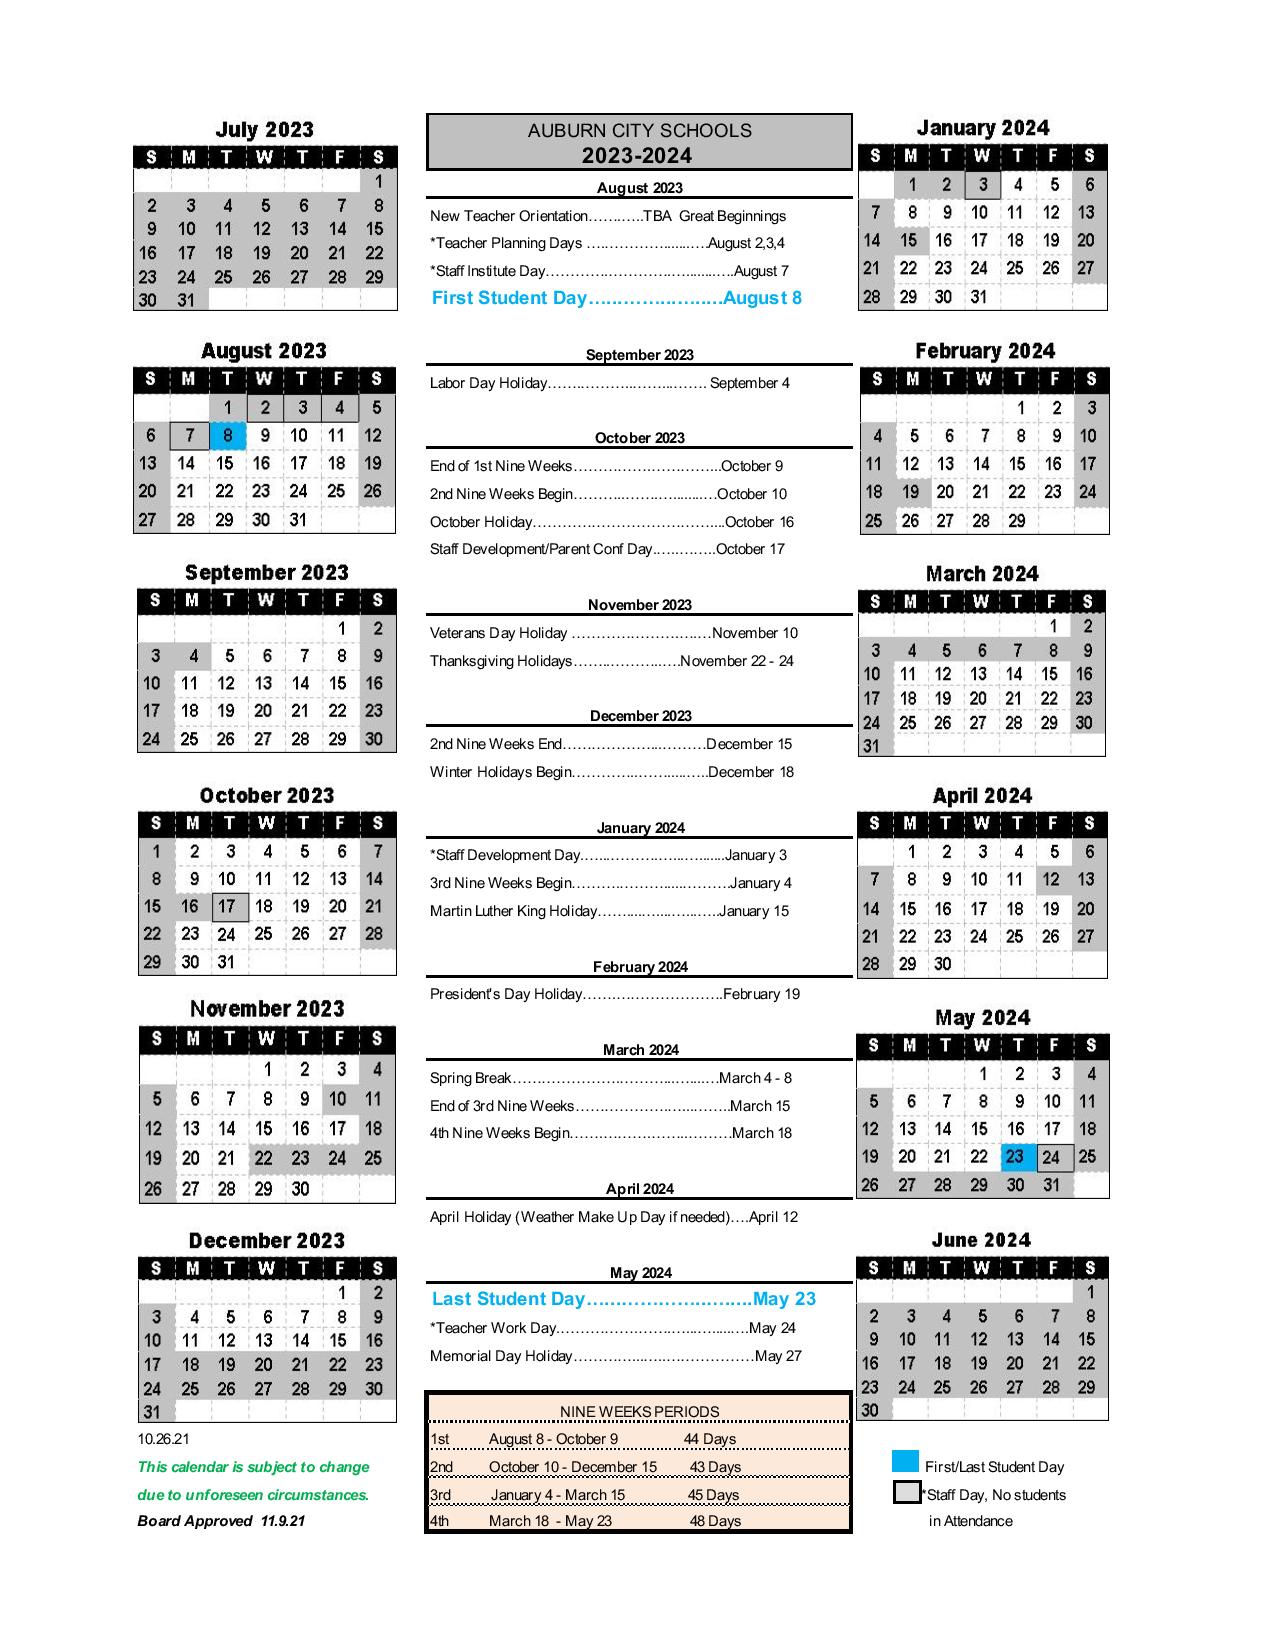 Auburn City Schools Calendar 2023-2024 in PDF